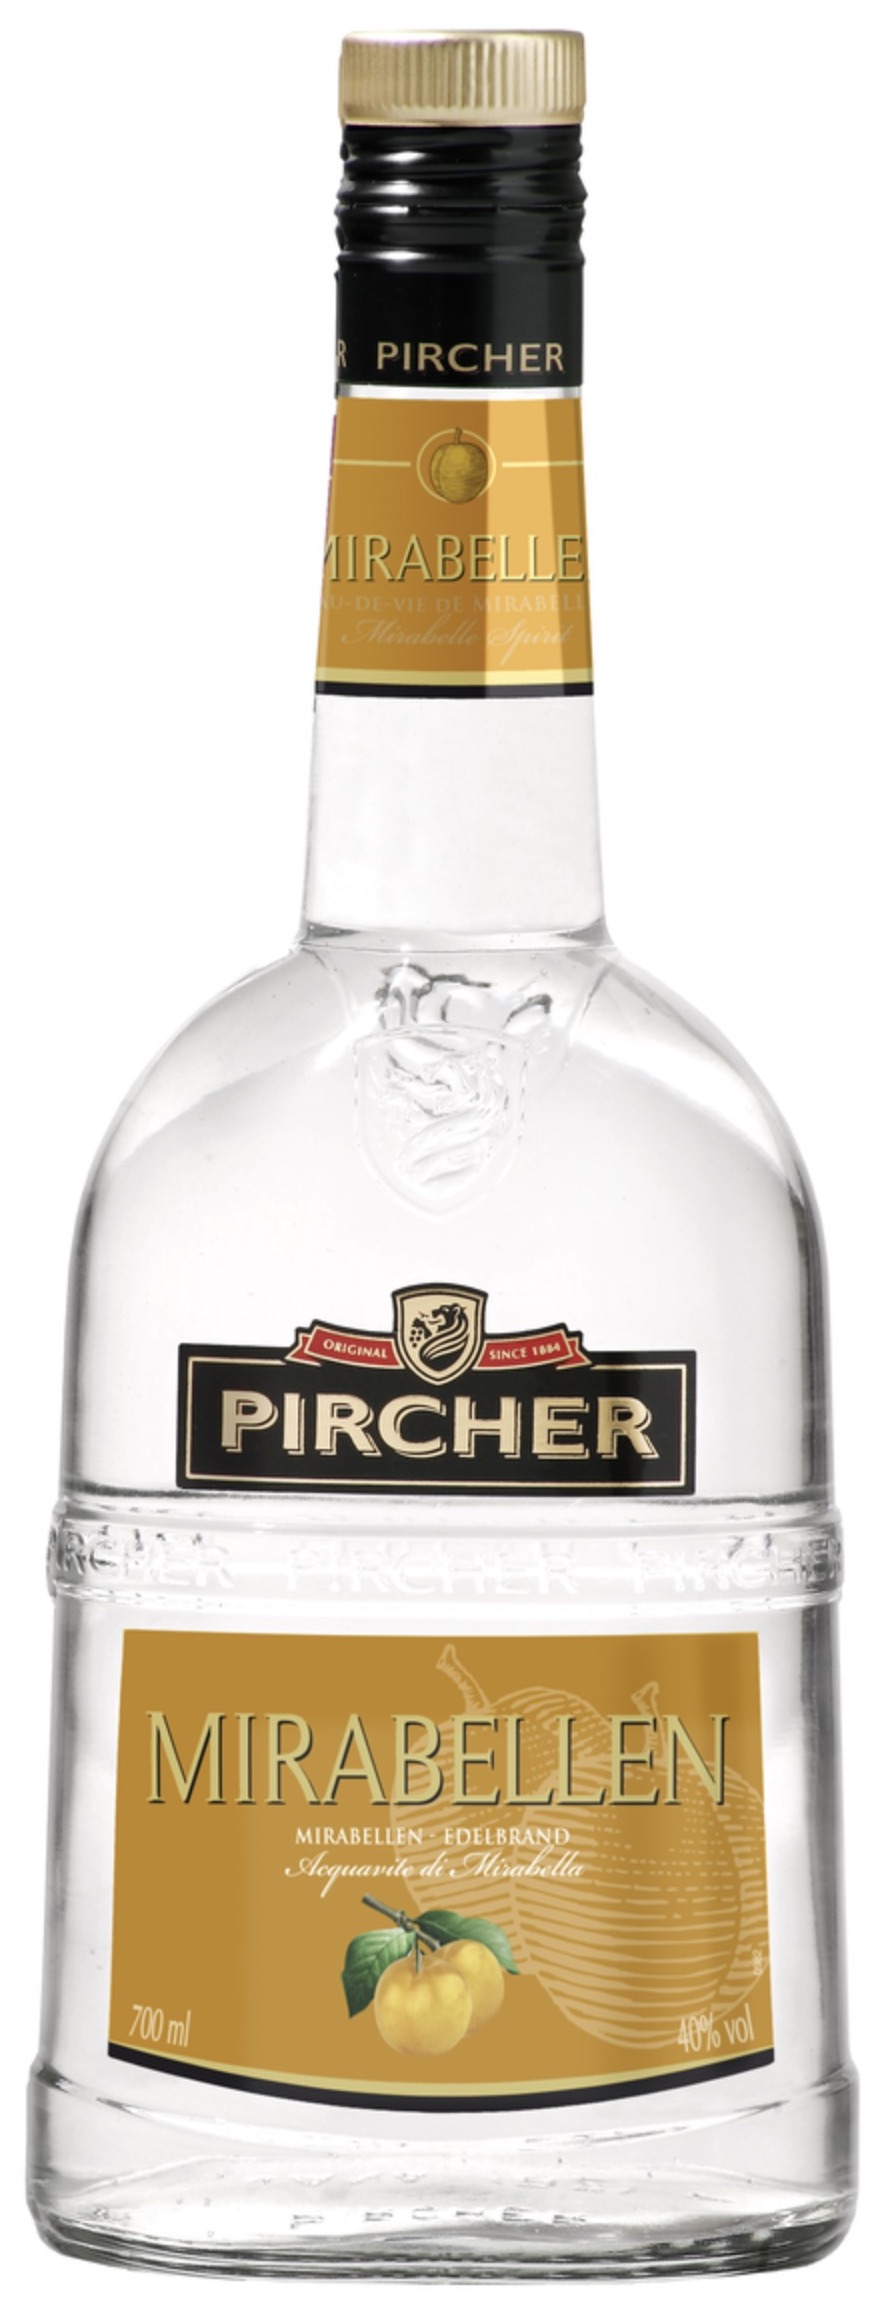 Pircher Mirabelle 40% vol. 0,7L